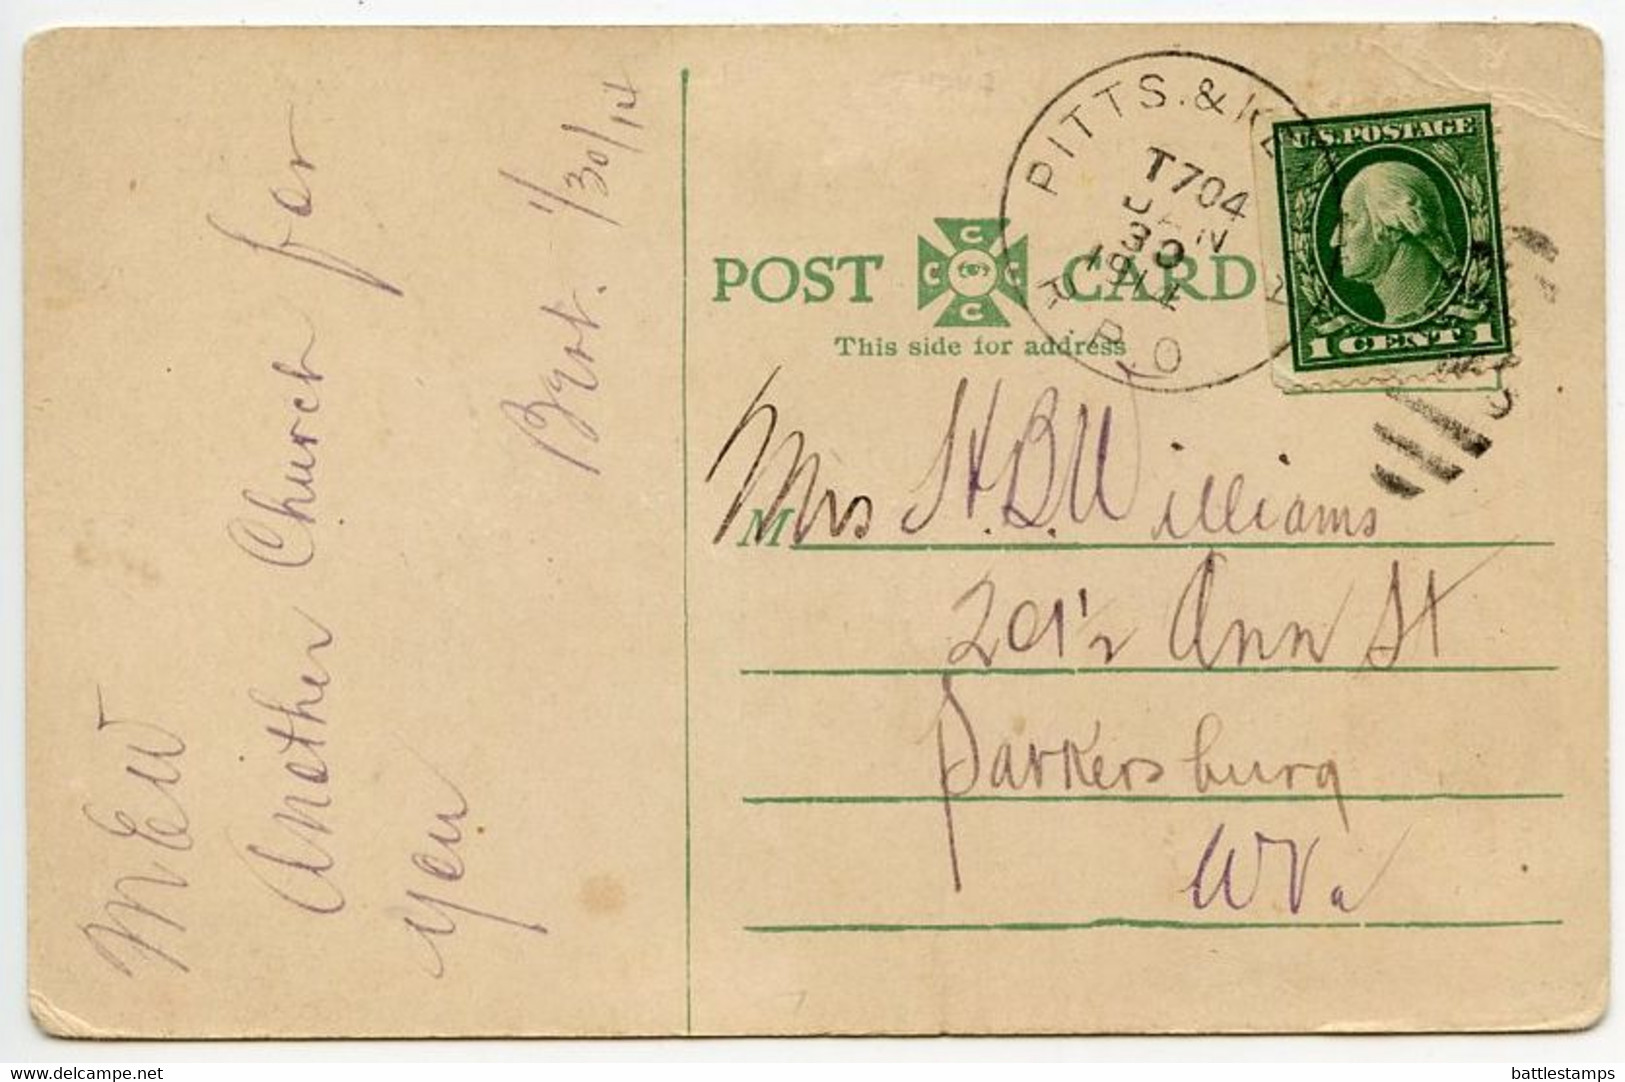 United States 1914 Postcard Seventh Avenue M. E. Church, Huntington, West Virginia; Pittsburg & Kenova RPO Postmark - Huntington